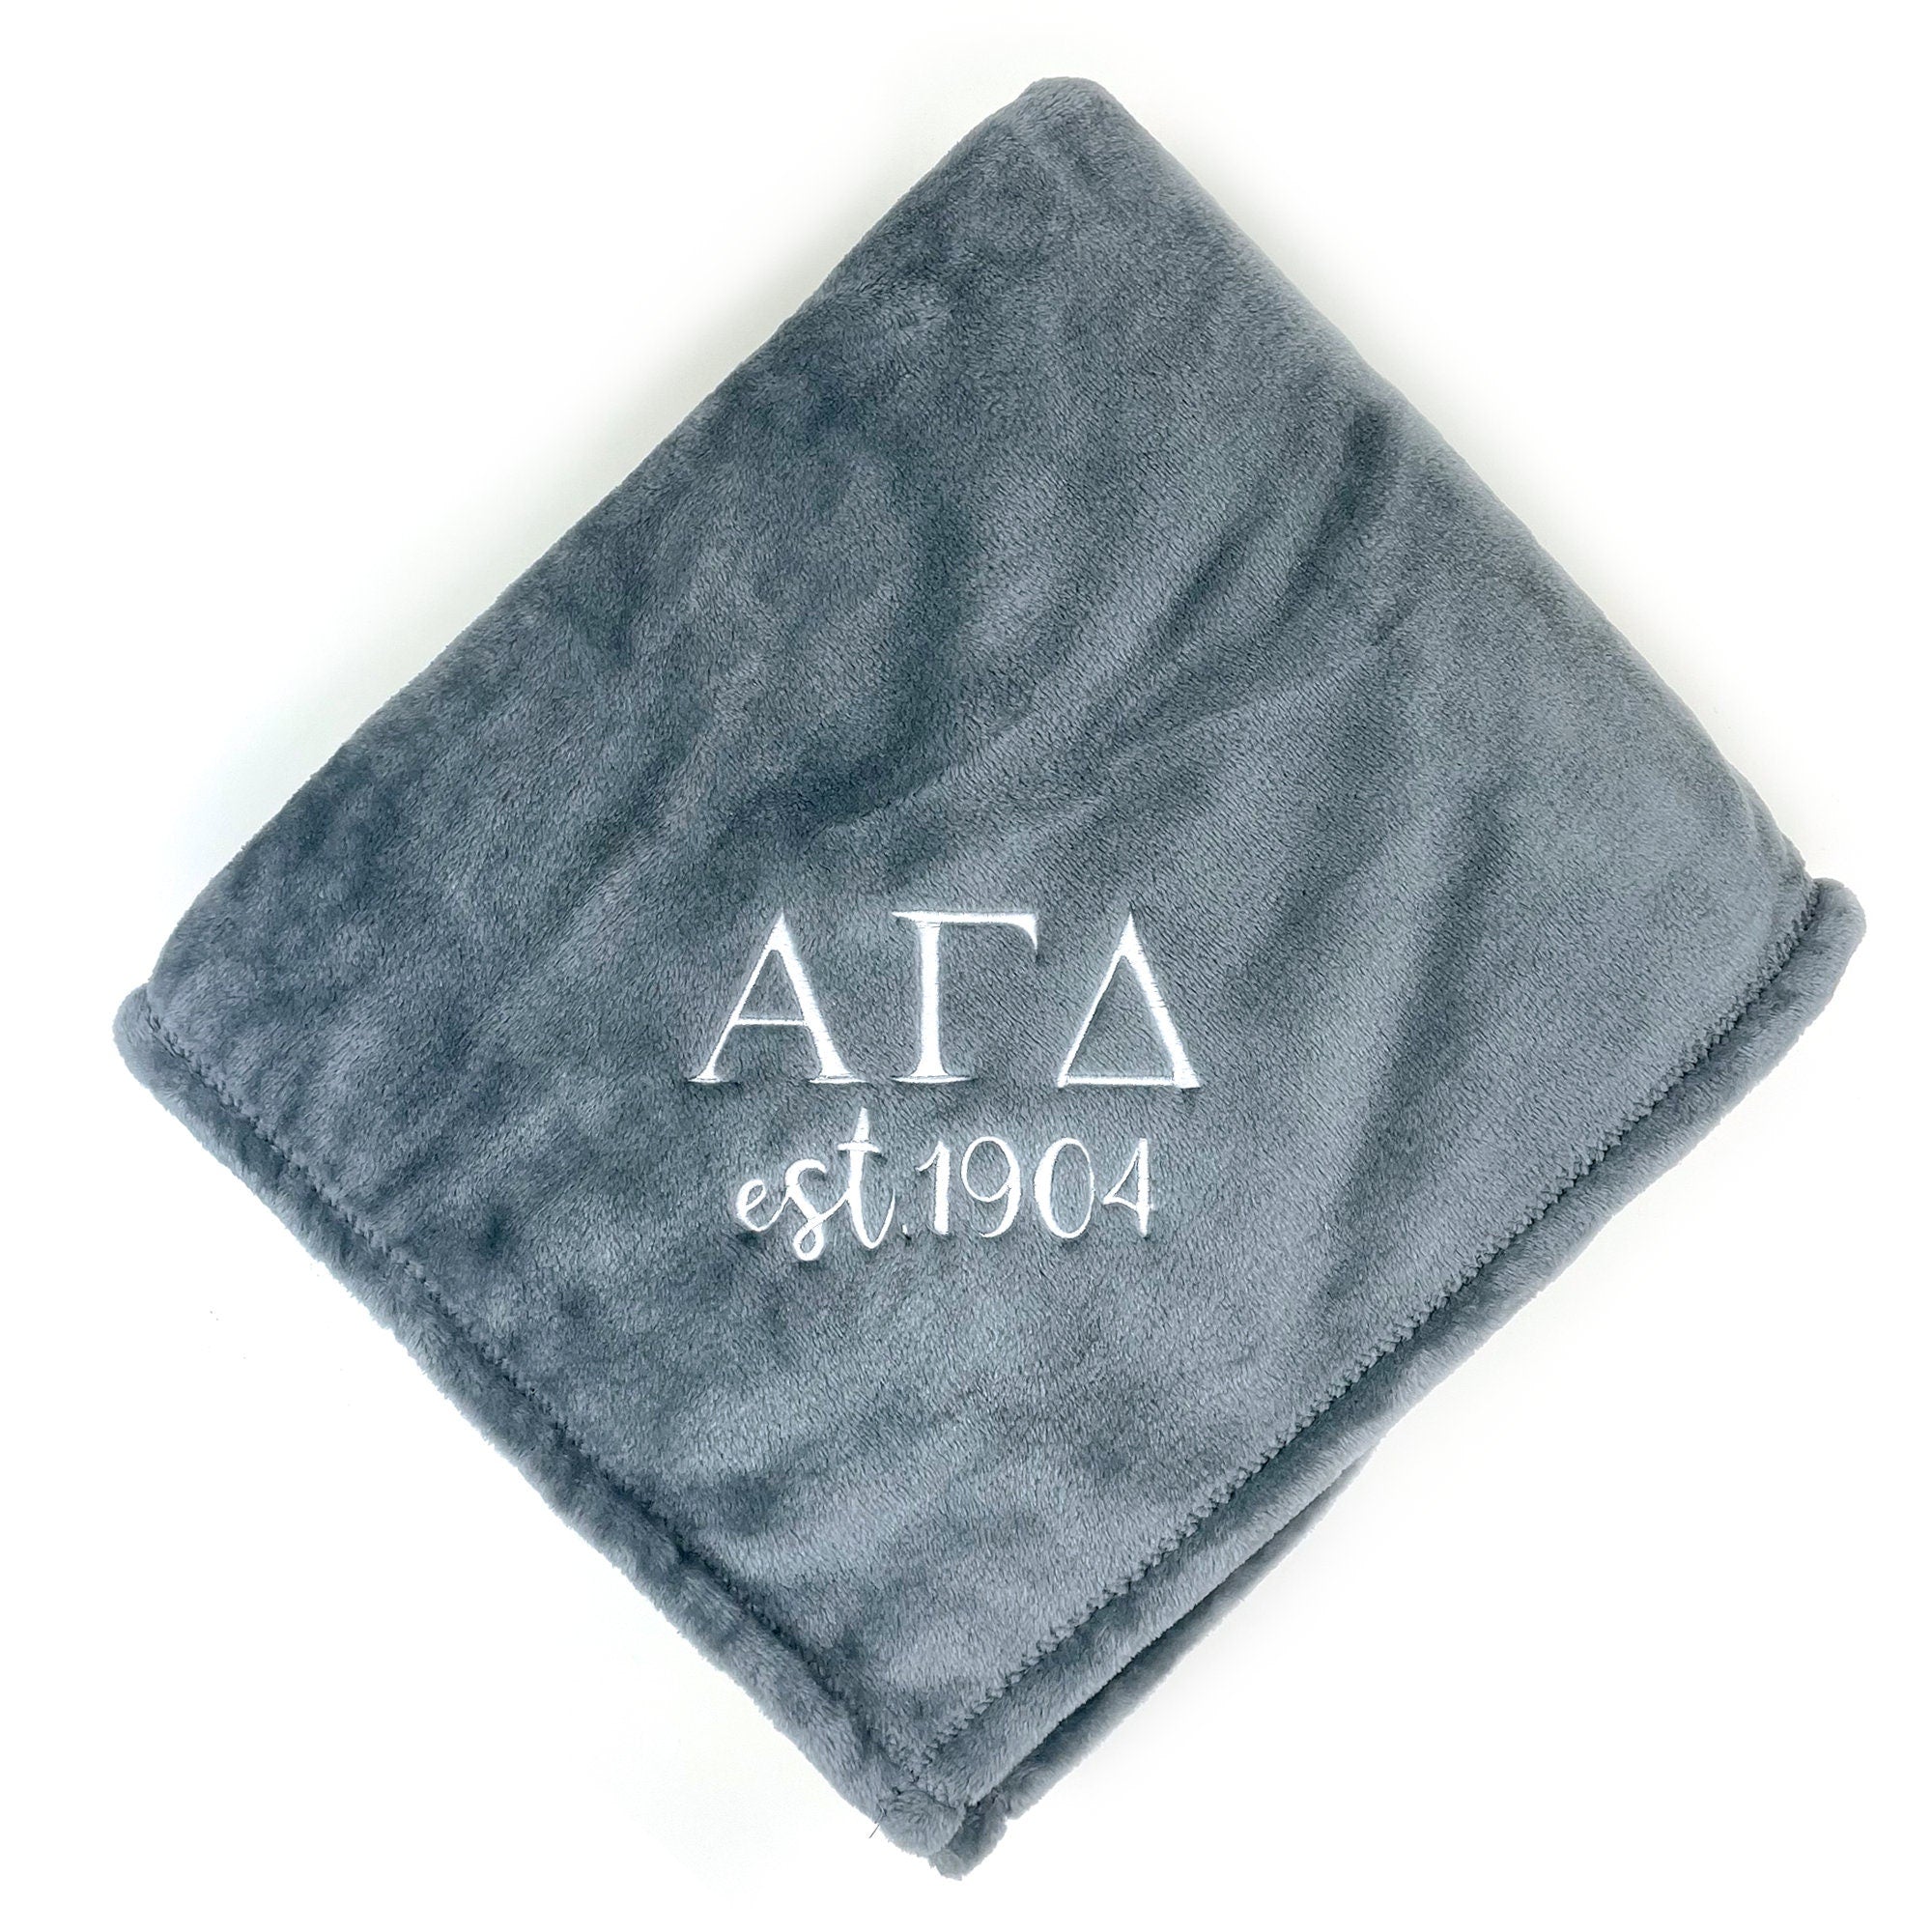 Alpha Gamma Delta est. 1904 Plush Throw Blanket - Grey/White - Go Greek Chic